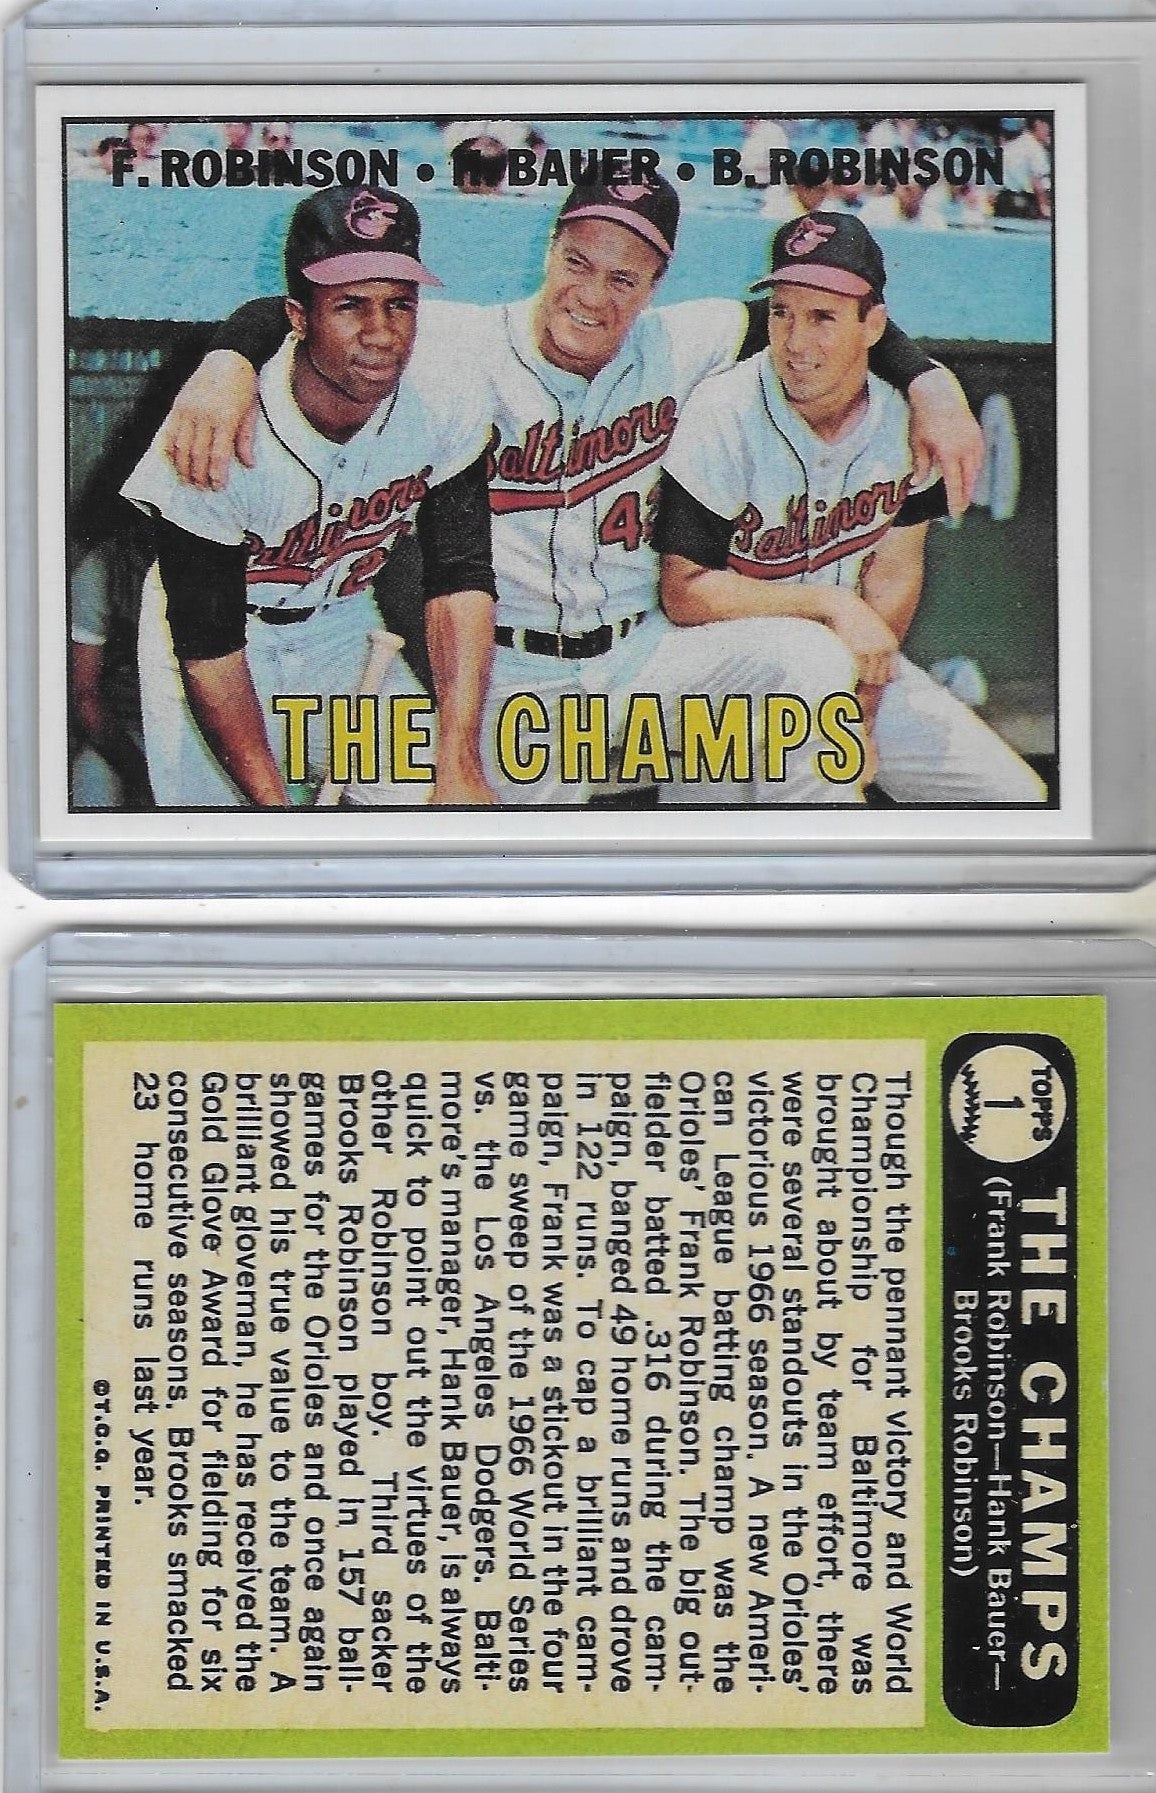 1967 TOPPS #1 "THE CHAMPS" REPRINT CARD. FRANK ROBINSON - BROOKS ROBINSON ....